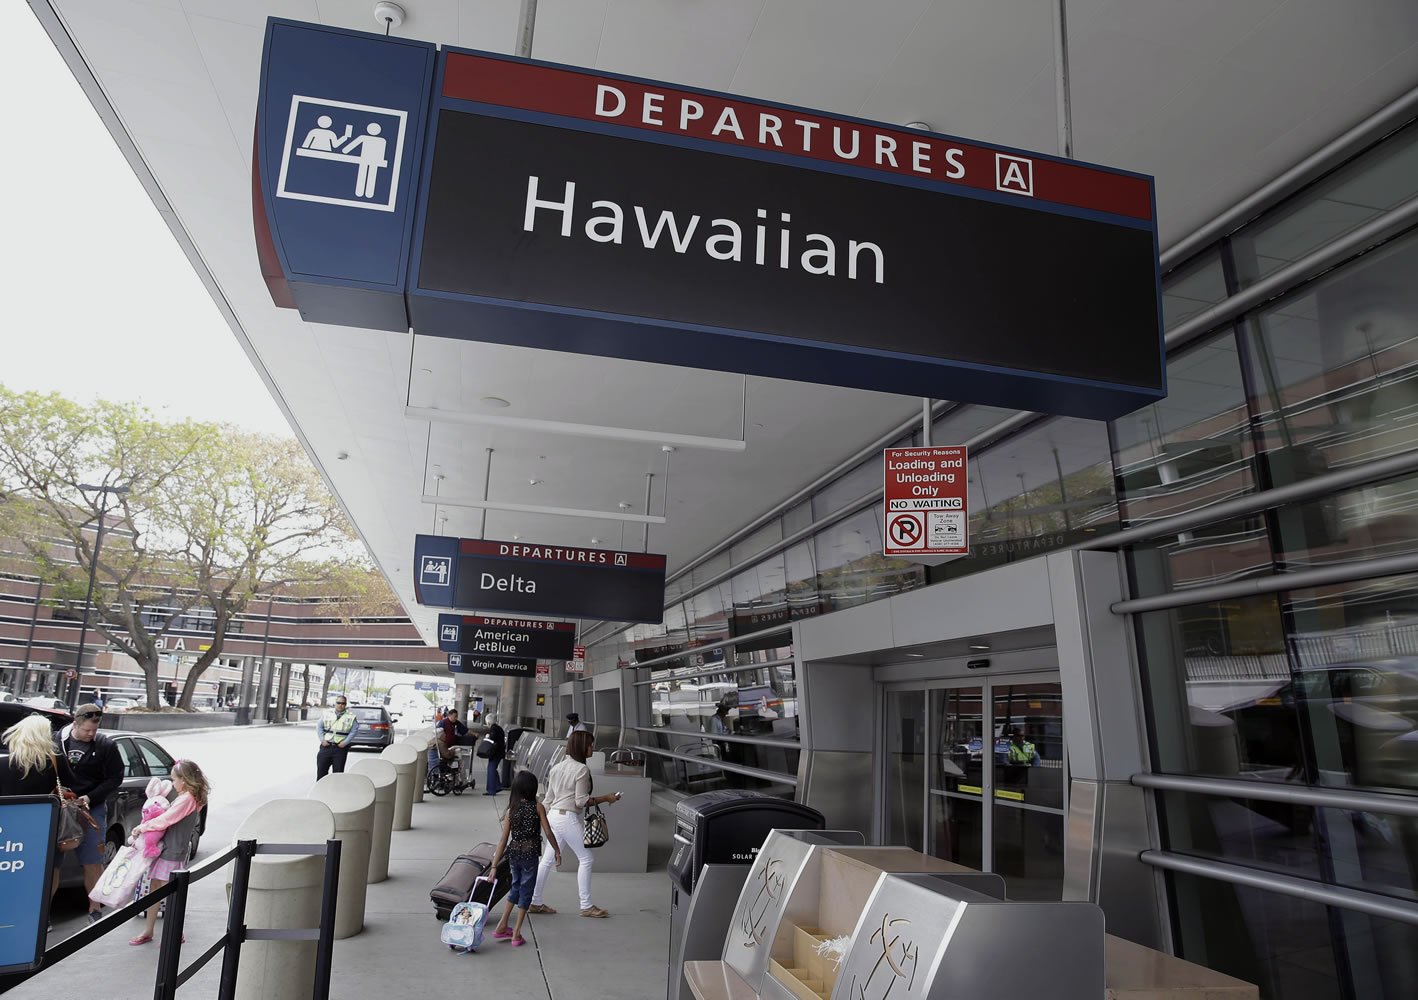 People make their way into Terminal A at Mineta San Jose International Airport near the Hawaiian Airlines gates Monday in San Jose, Calif.